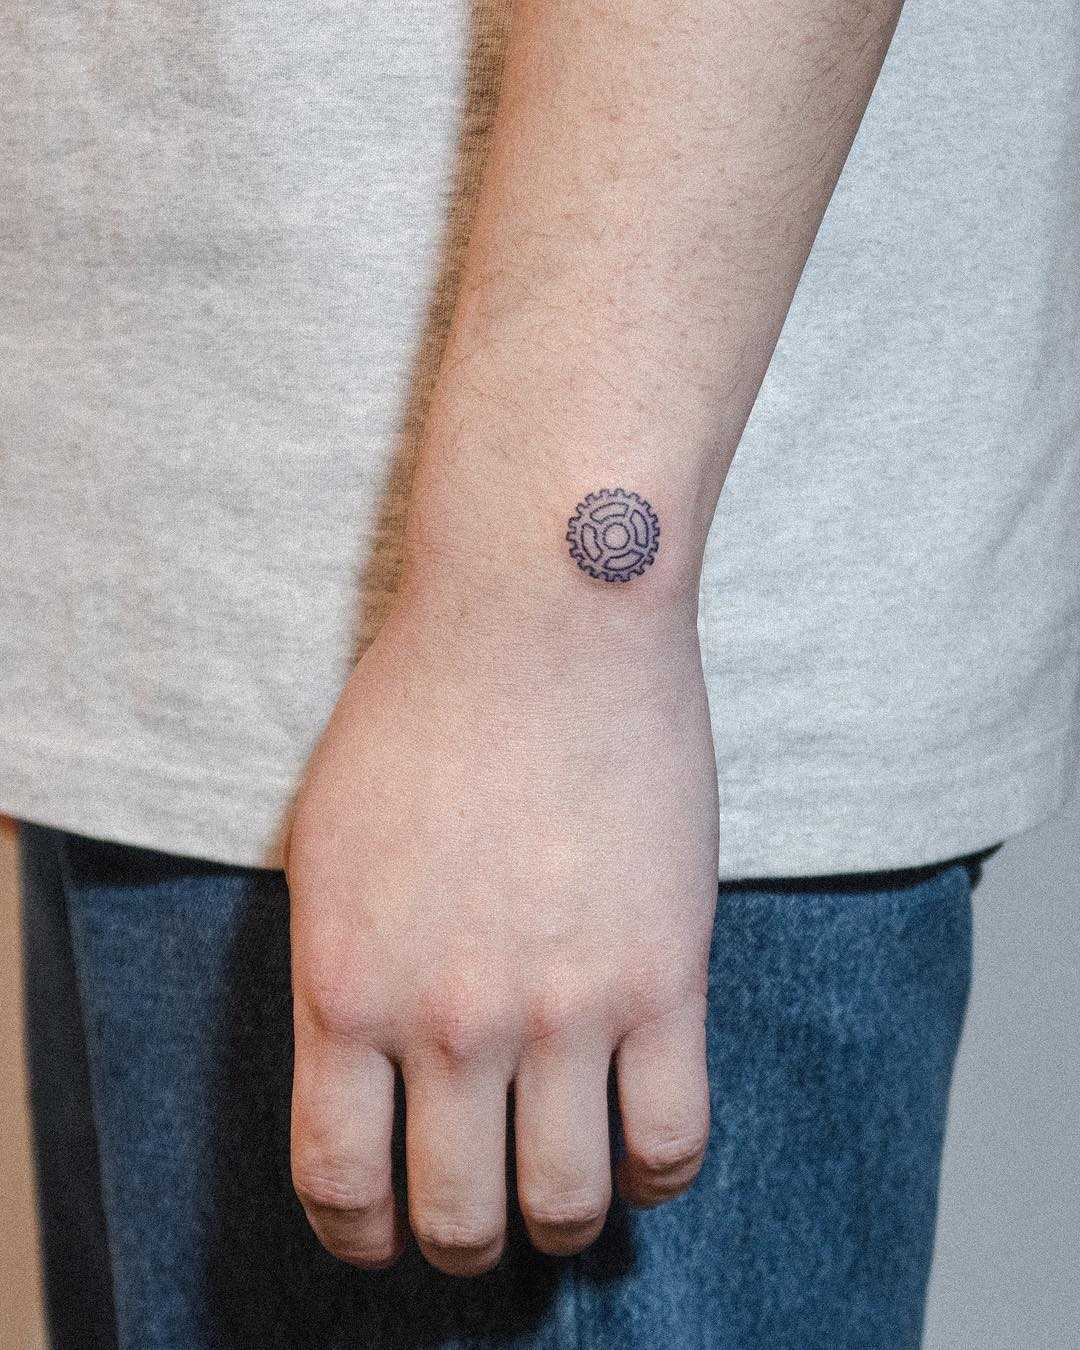 Small chainring tattoo by tattooist Bongkee 